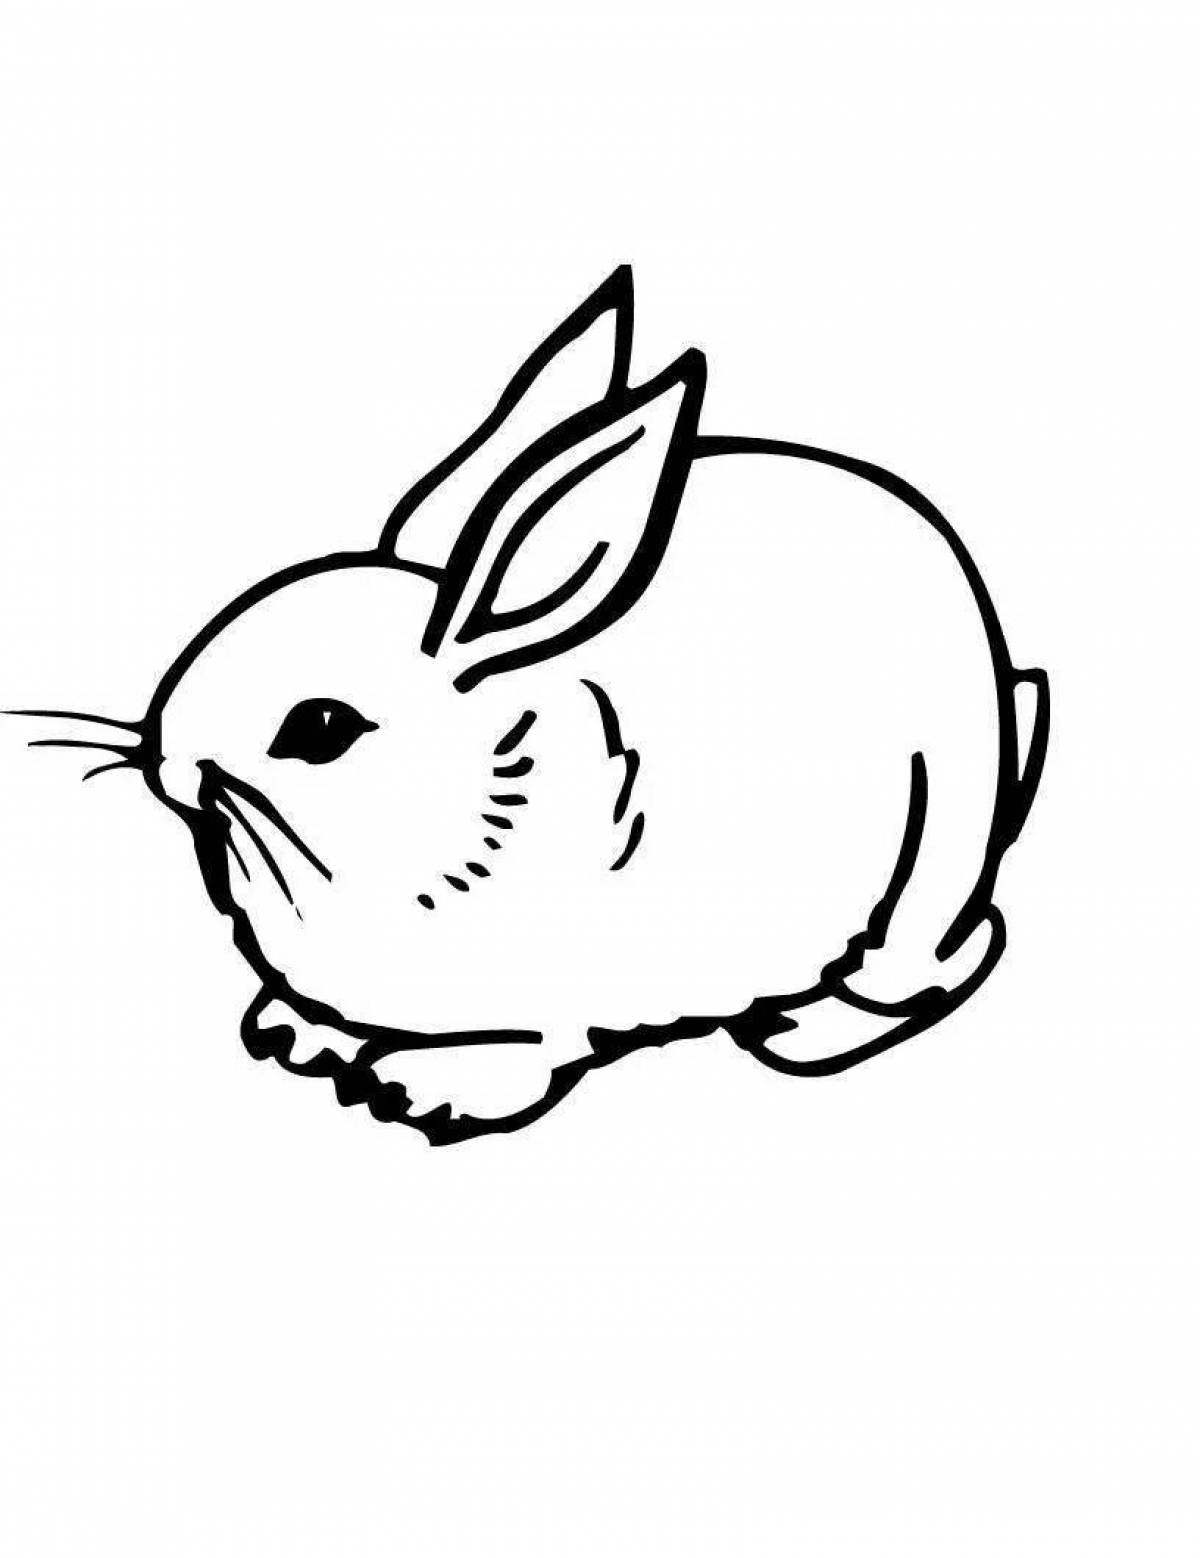 Coloring book inquisitive rabbit